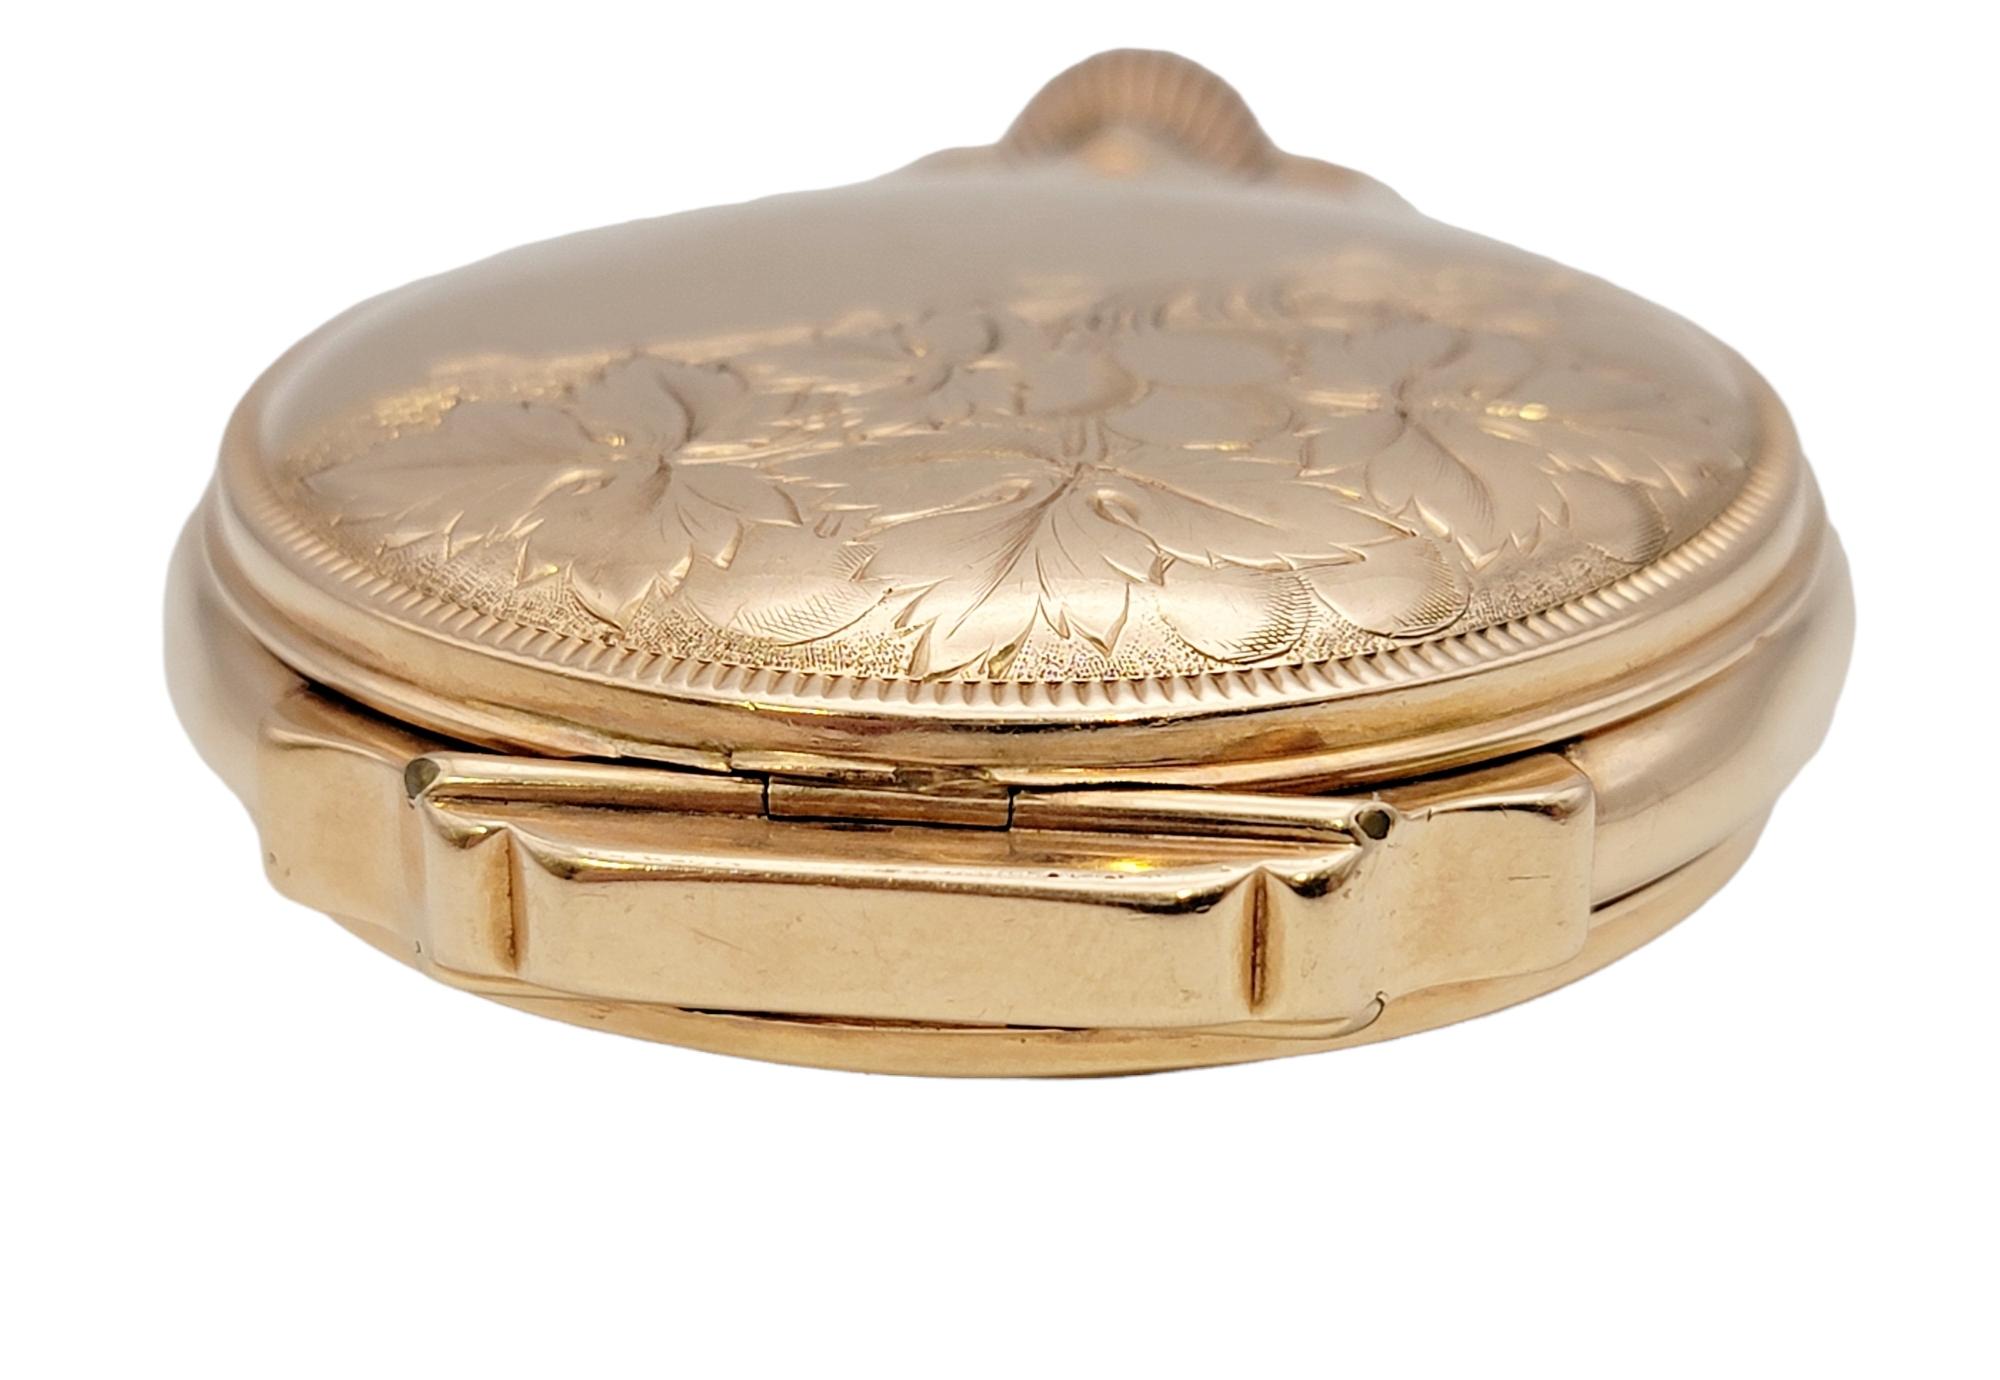 waltham rose gold pocket watch